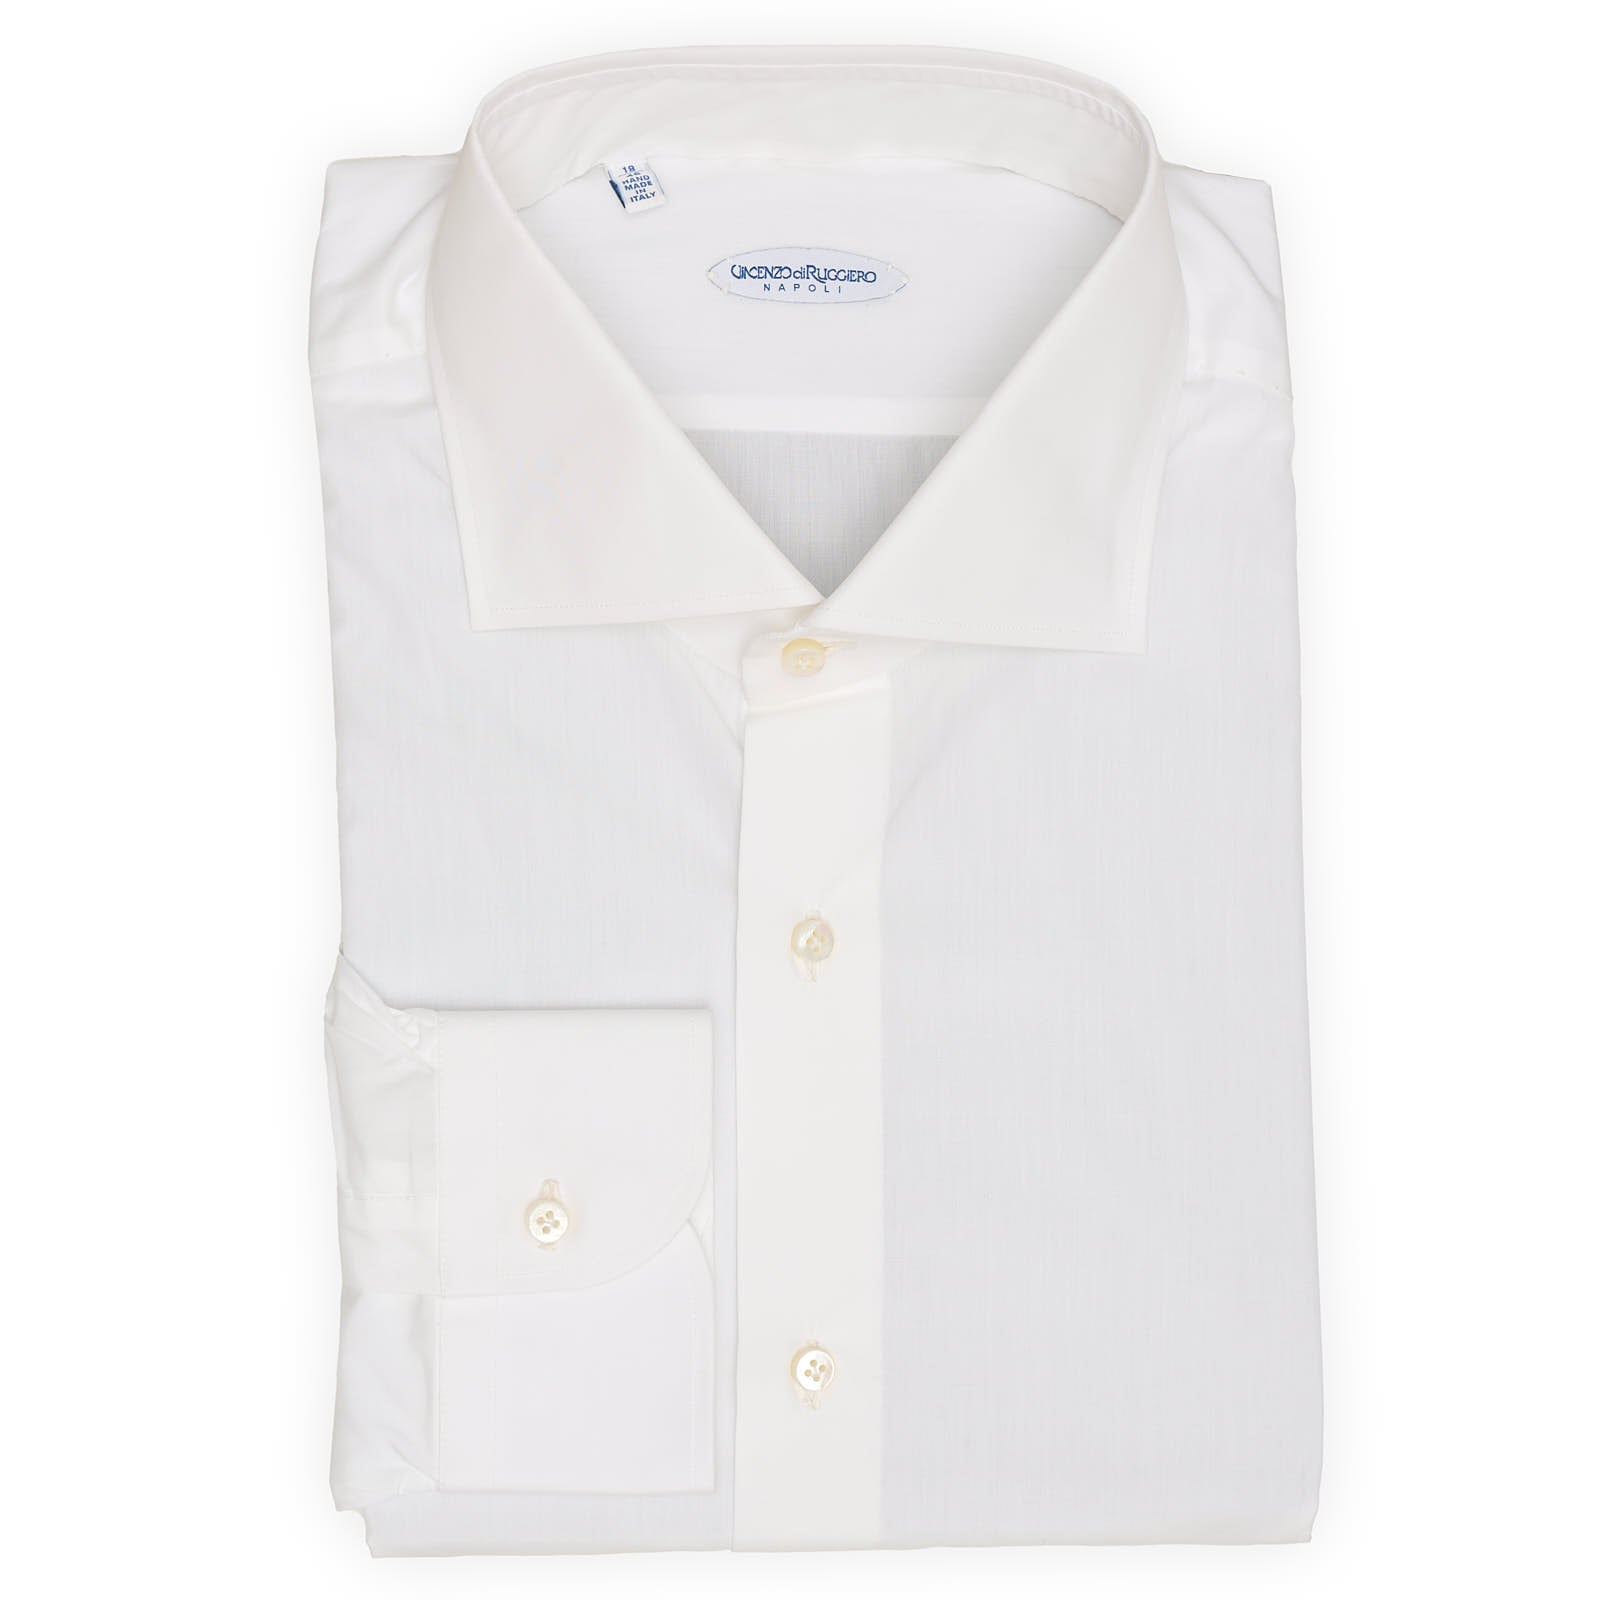 VINCENZO DI RUGGIERO Handmade White Cotton Dress Shirt EU 46 NEW US 18